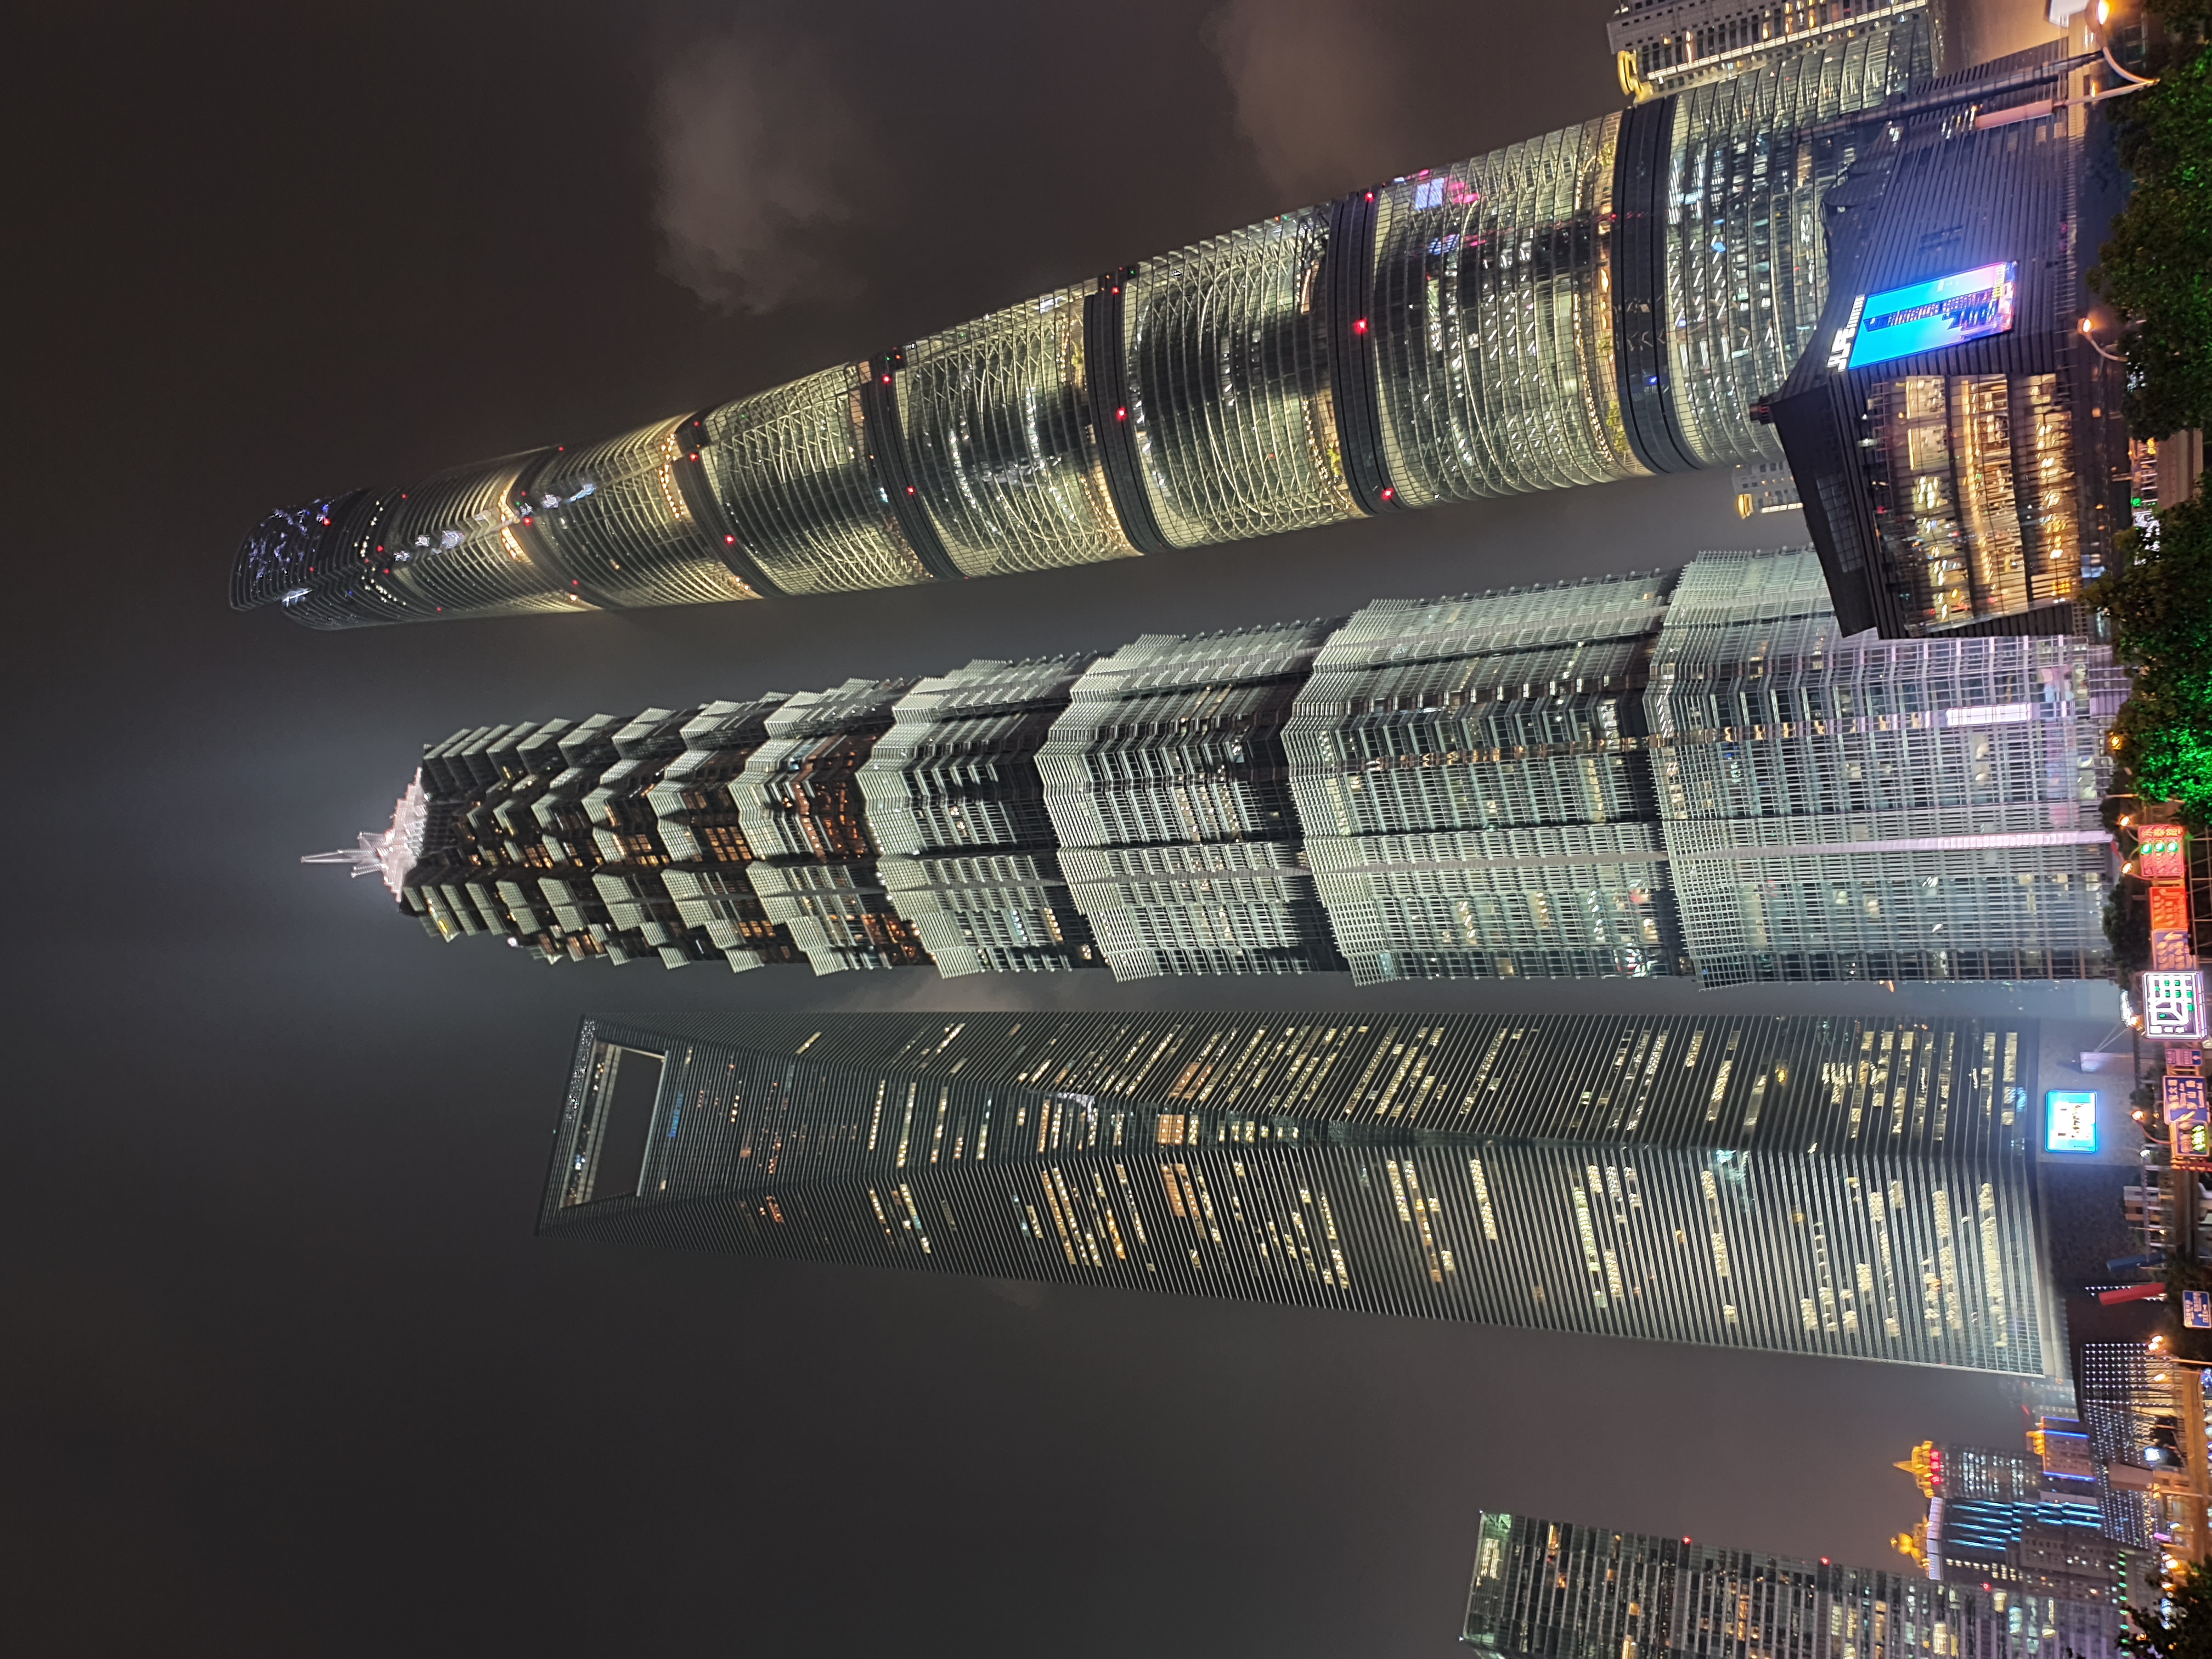 Shanghai towers, de 3 tårne i Shanghai